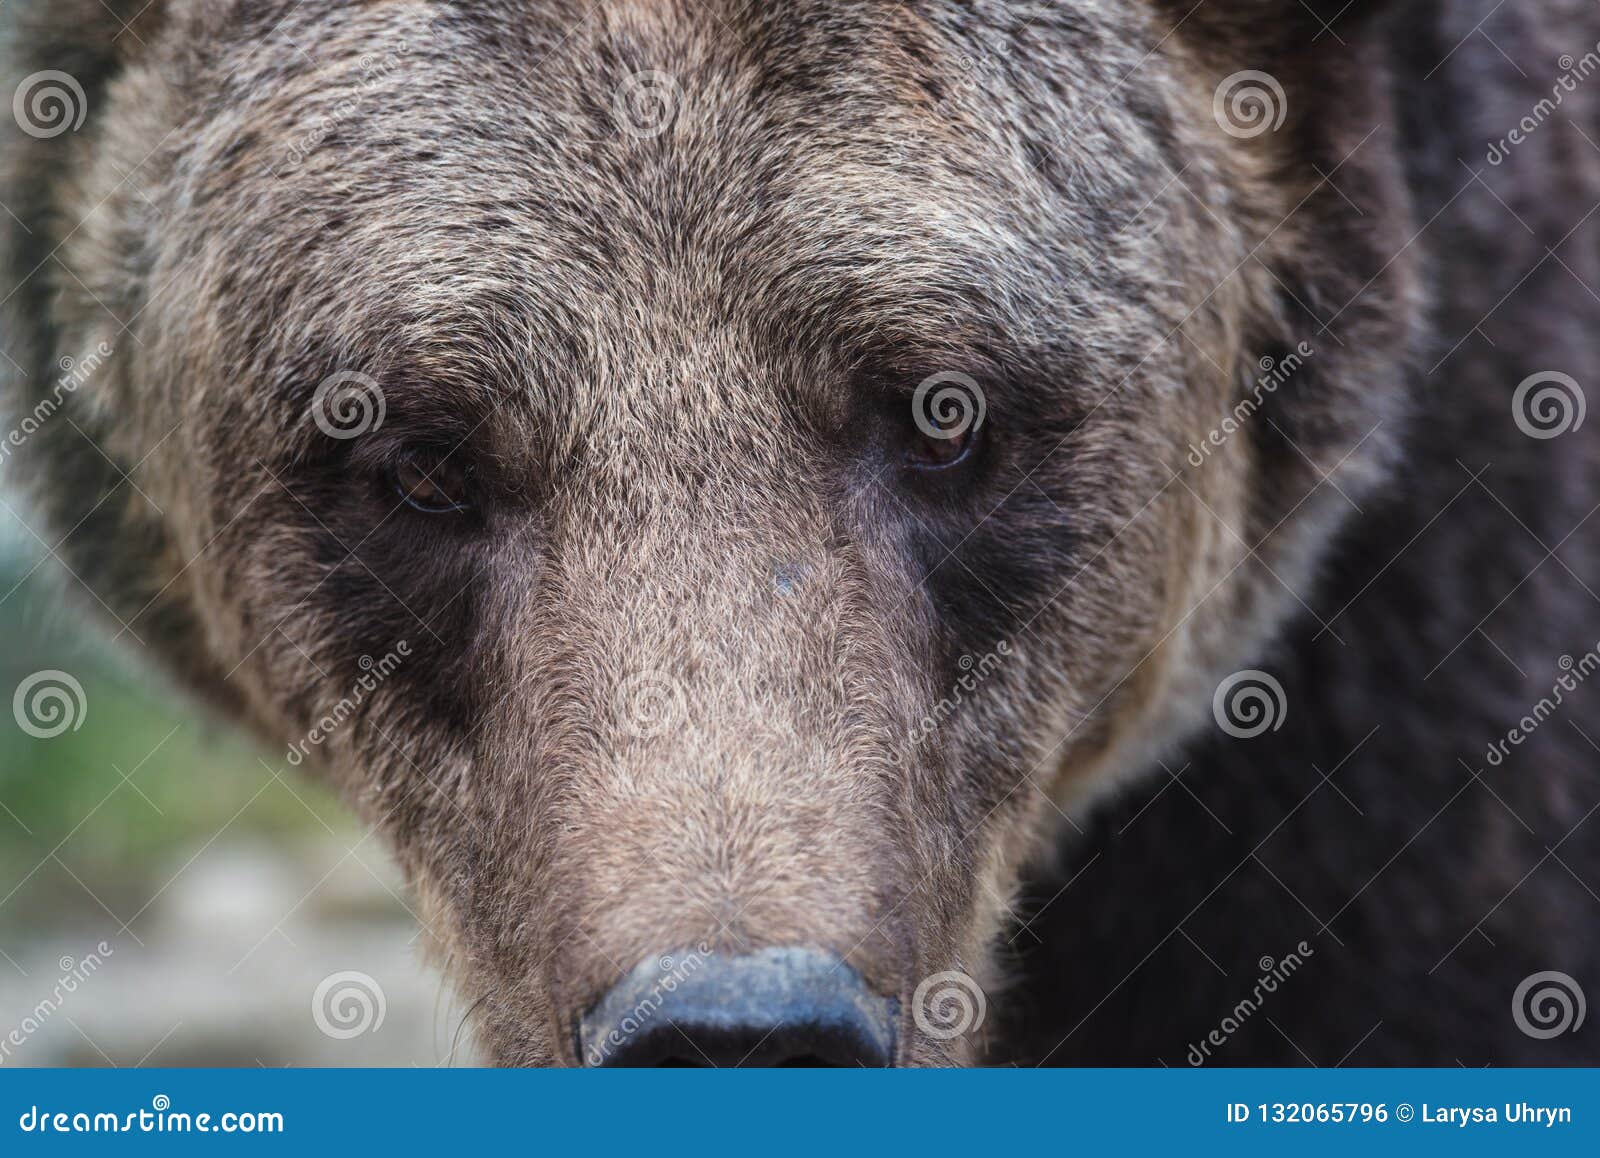 big european brown bear ursidae, ursus arctos with expressive sad eyes, extremely close-up